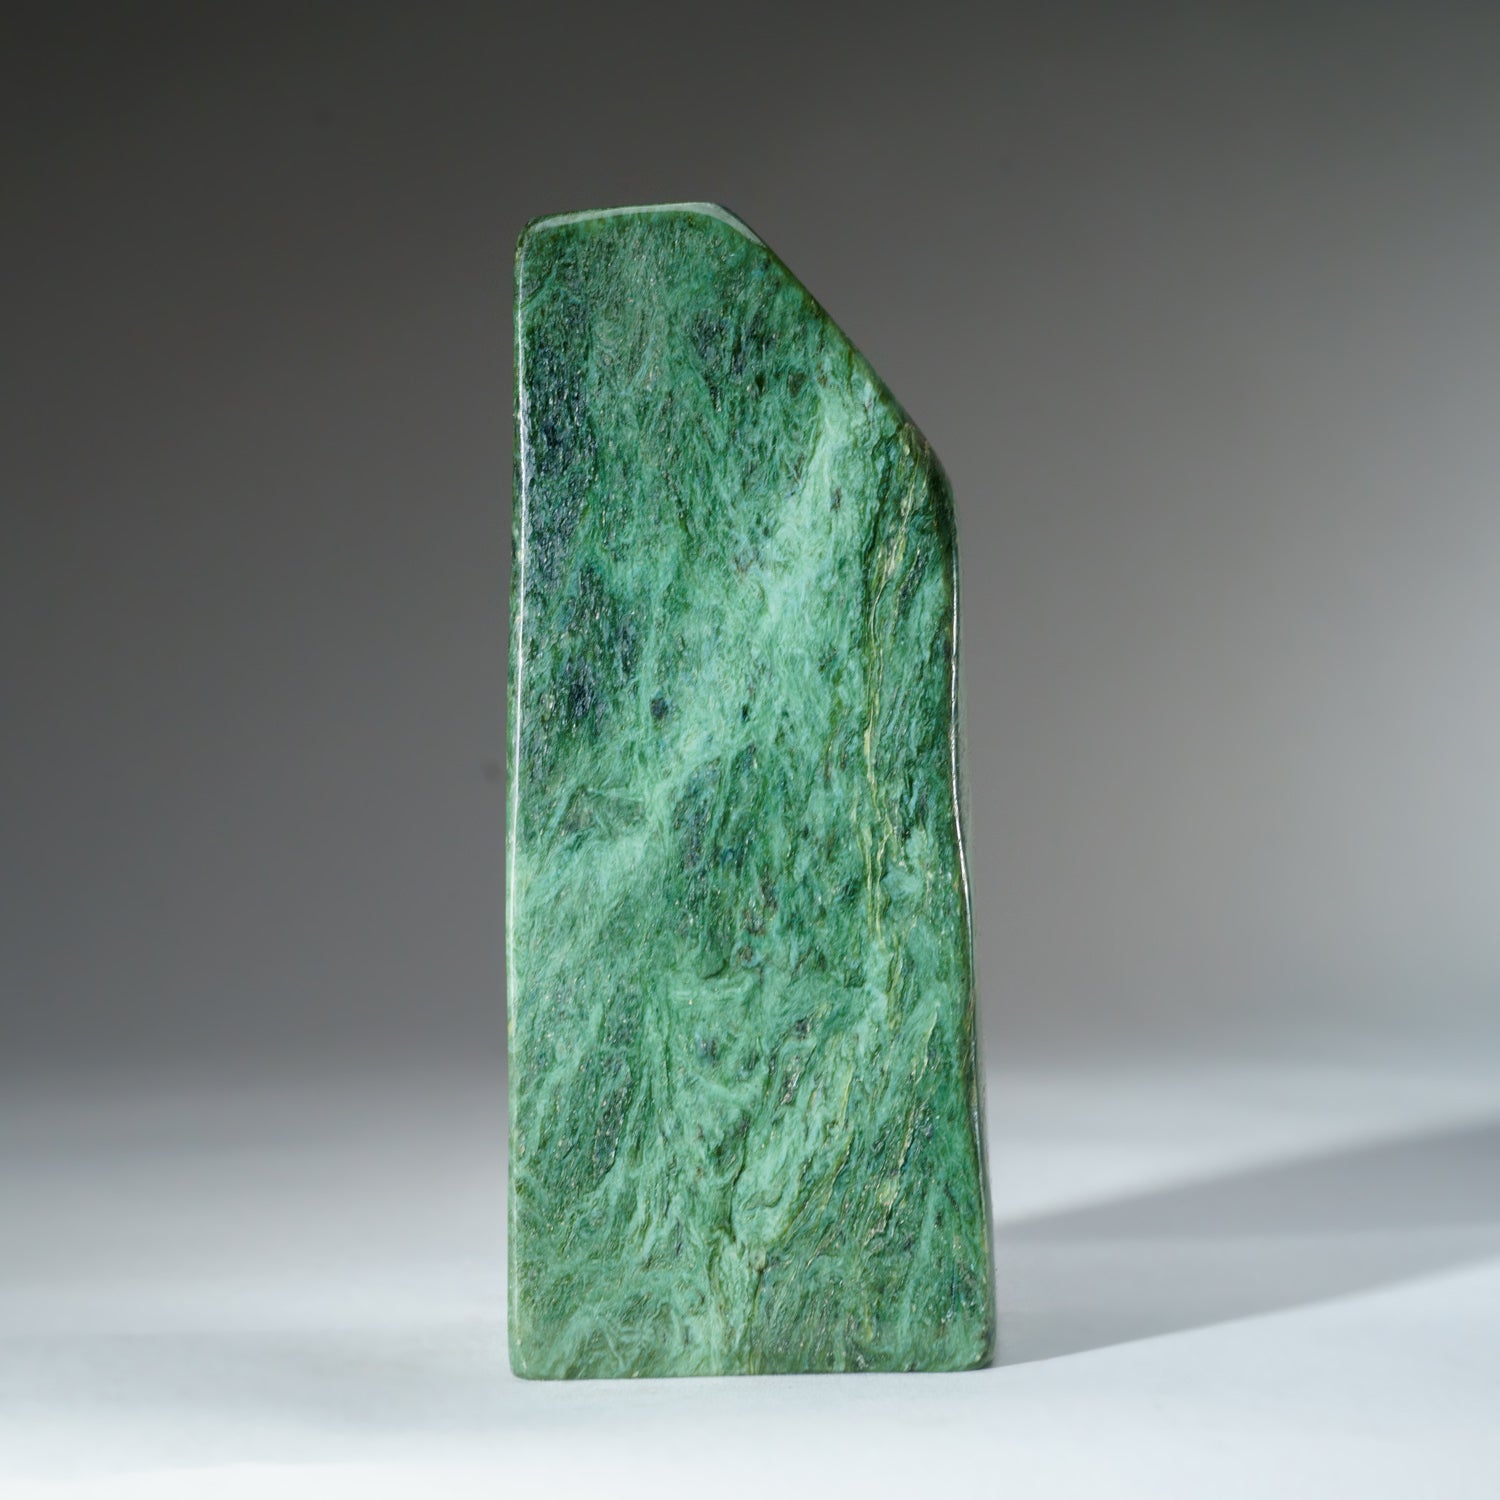 Polished Nephrite Jade Freeform from Pakistan (2.7 lbs)